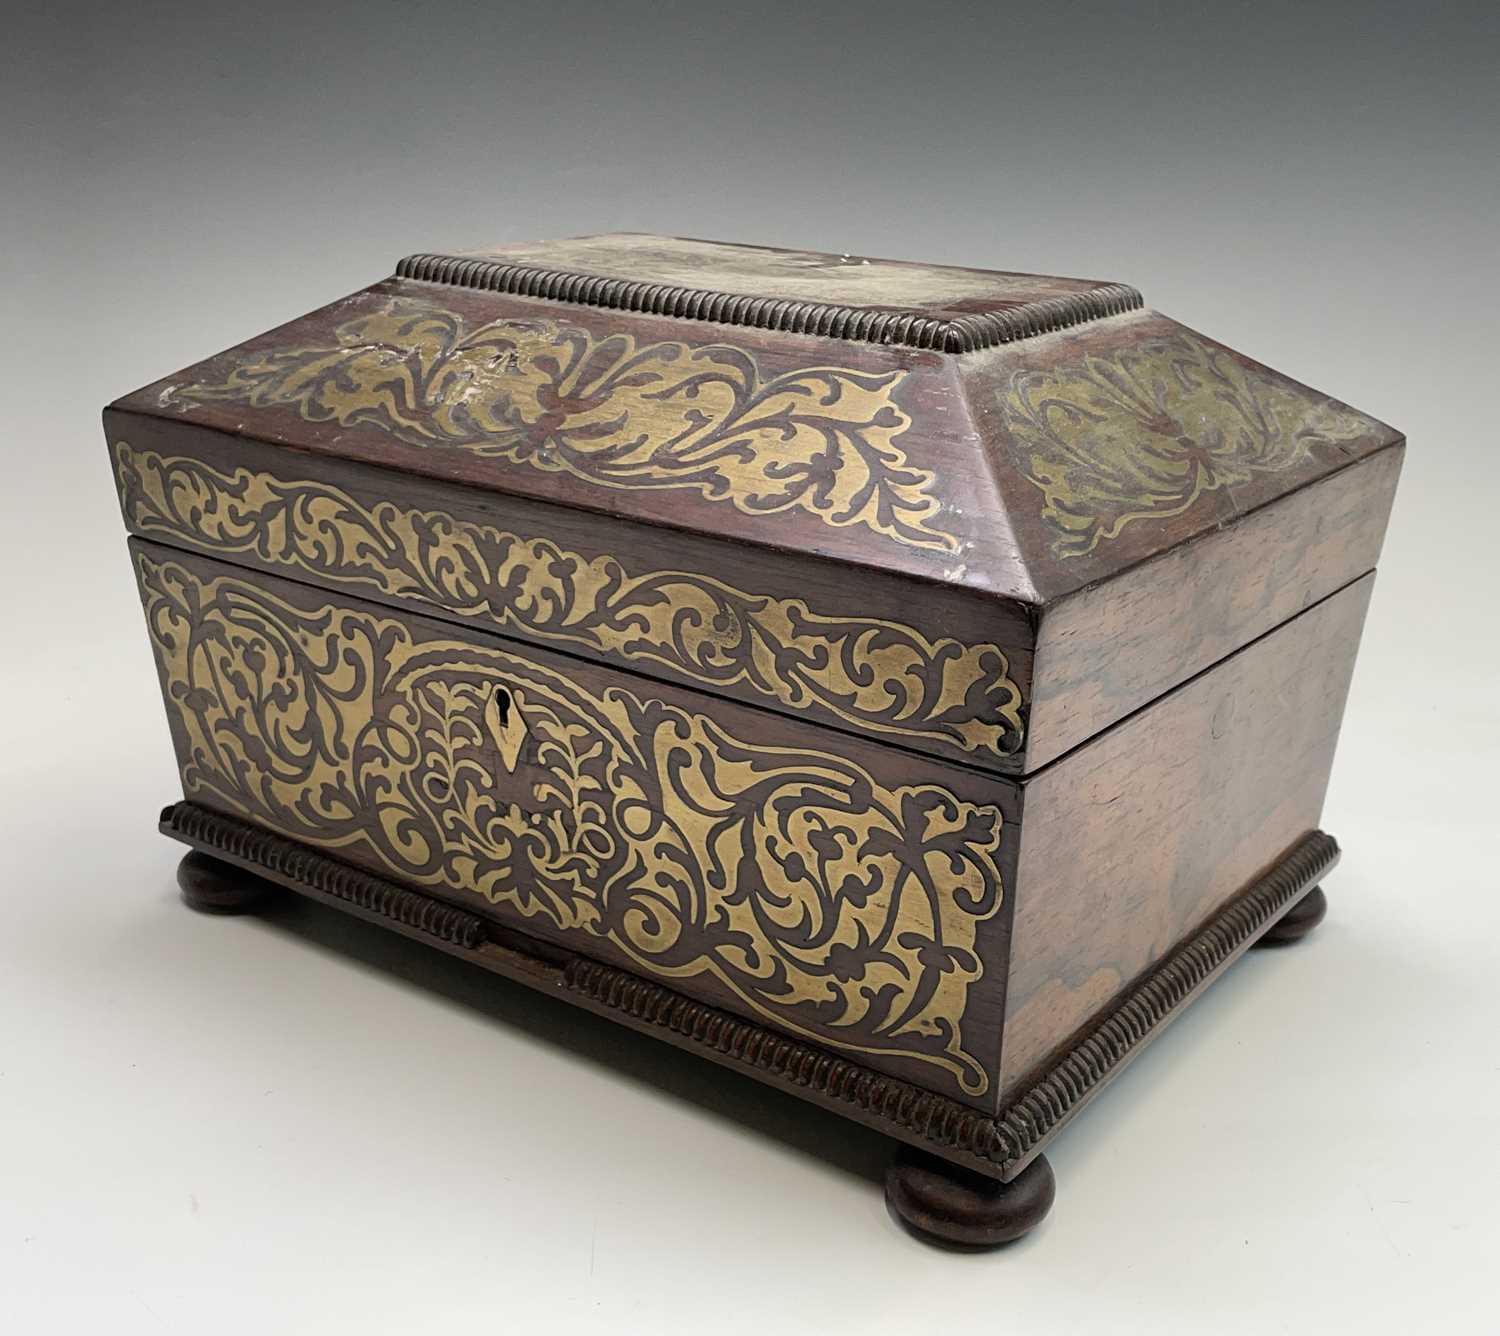 A Regency rosewood and cut brass inlaid box or casket, raised on bun feet, width 30cm. Provenance: